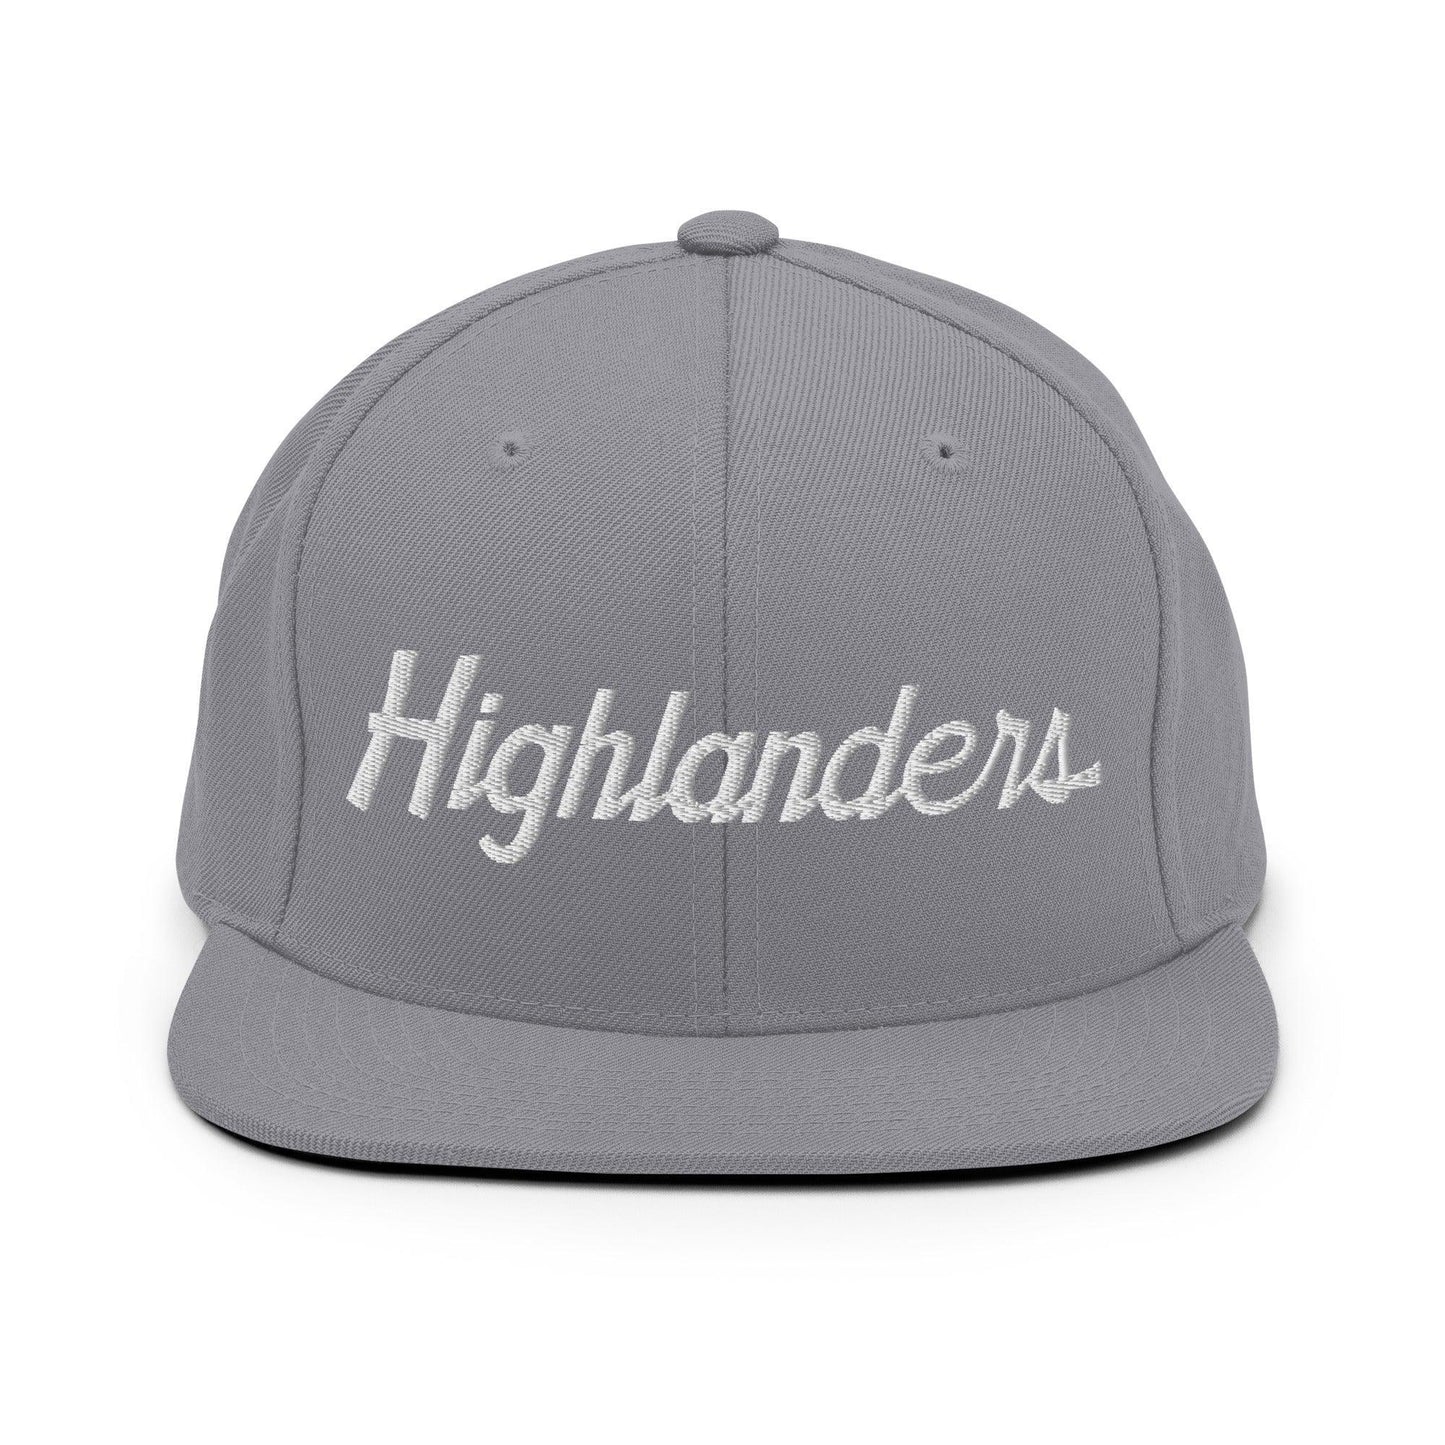 Highlanders School Mascot Script Snapback Hat Silver